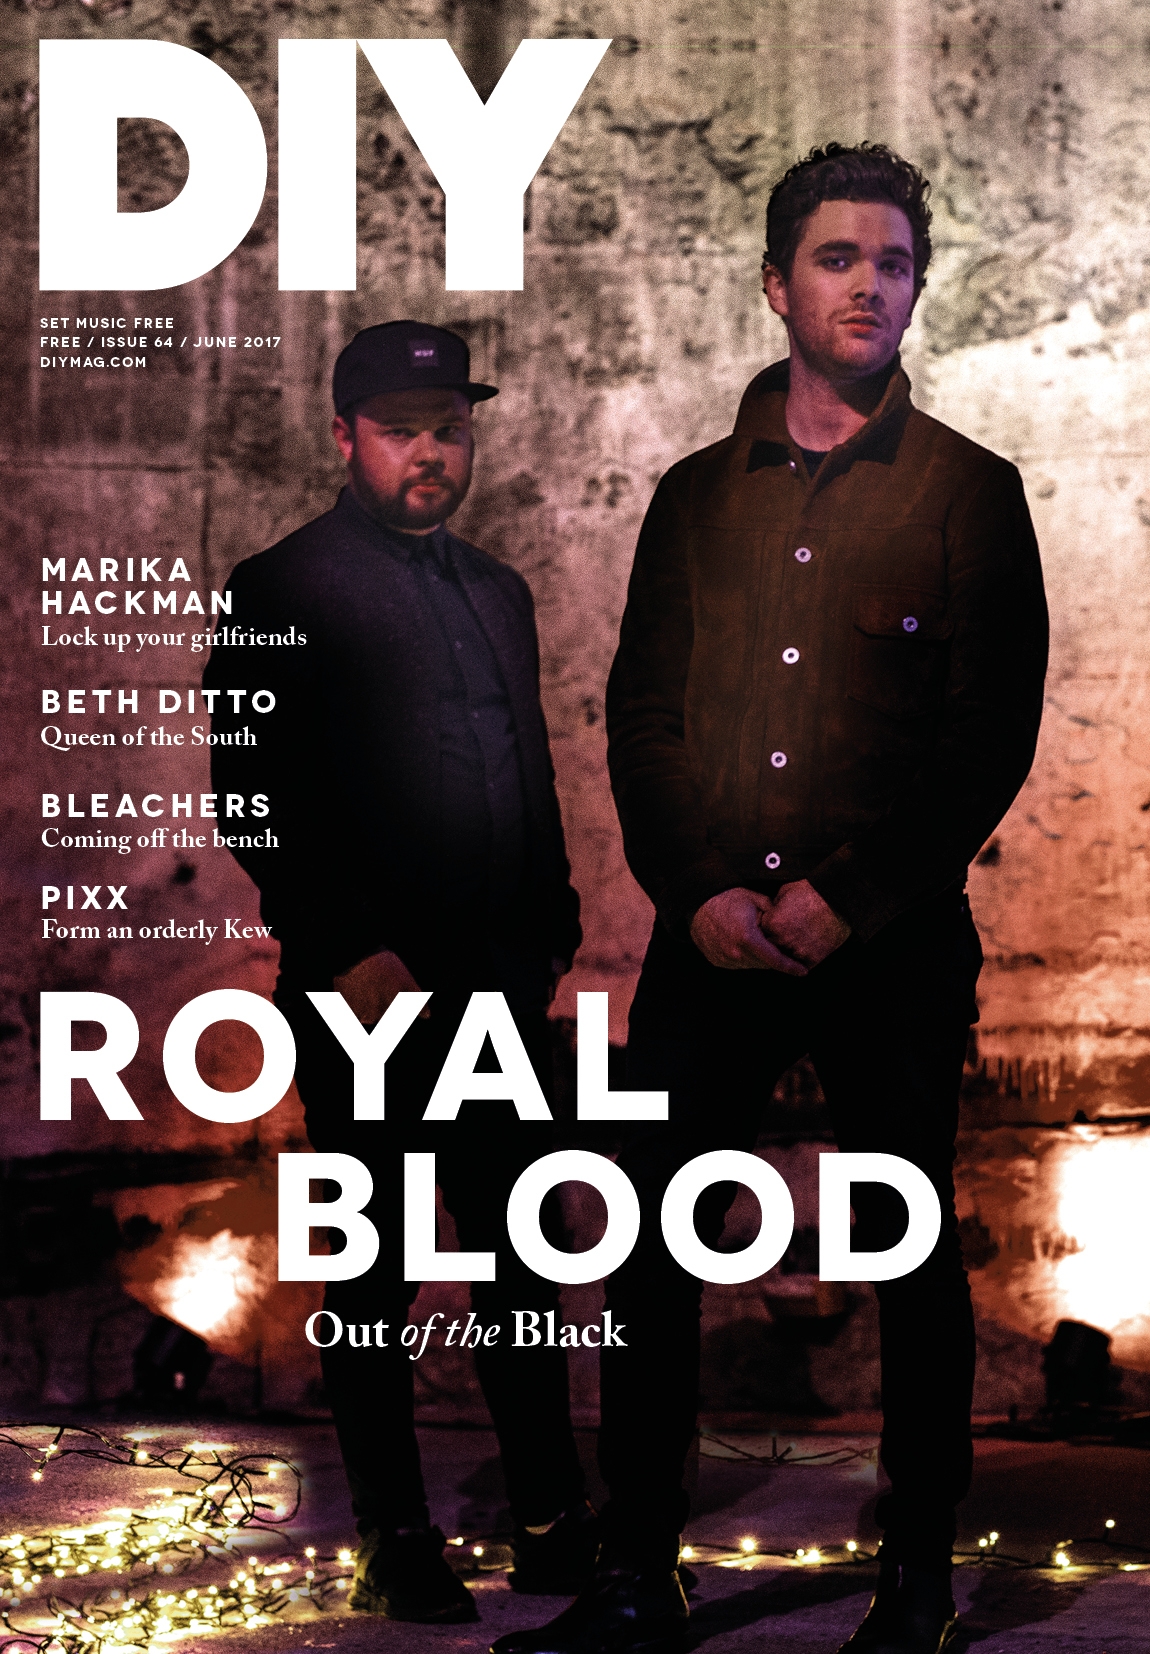 Royal Blood: DIY’s June 2017 cover stars revealed!